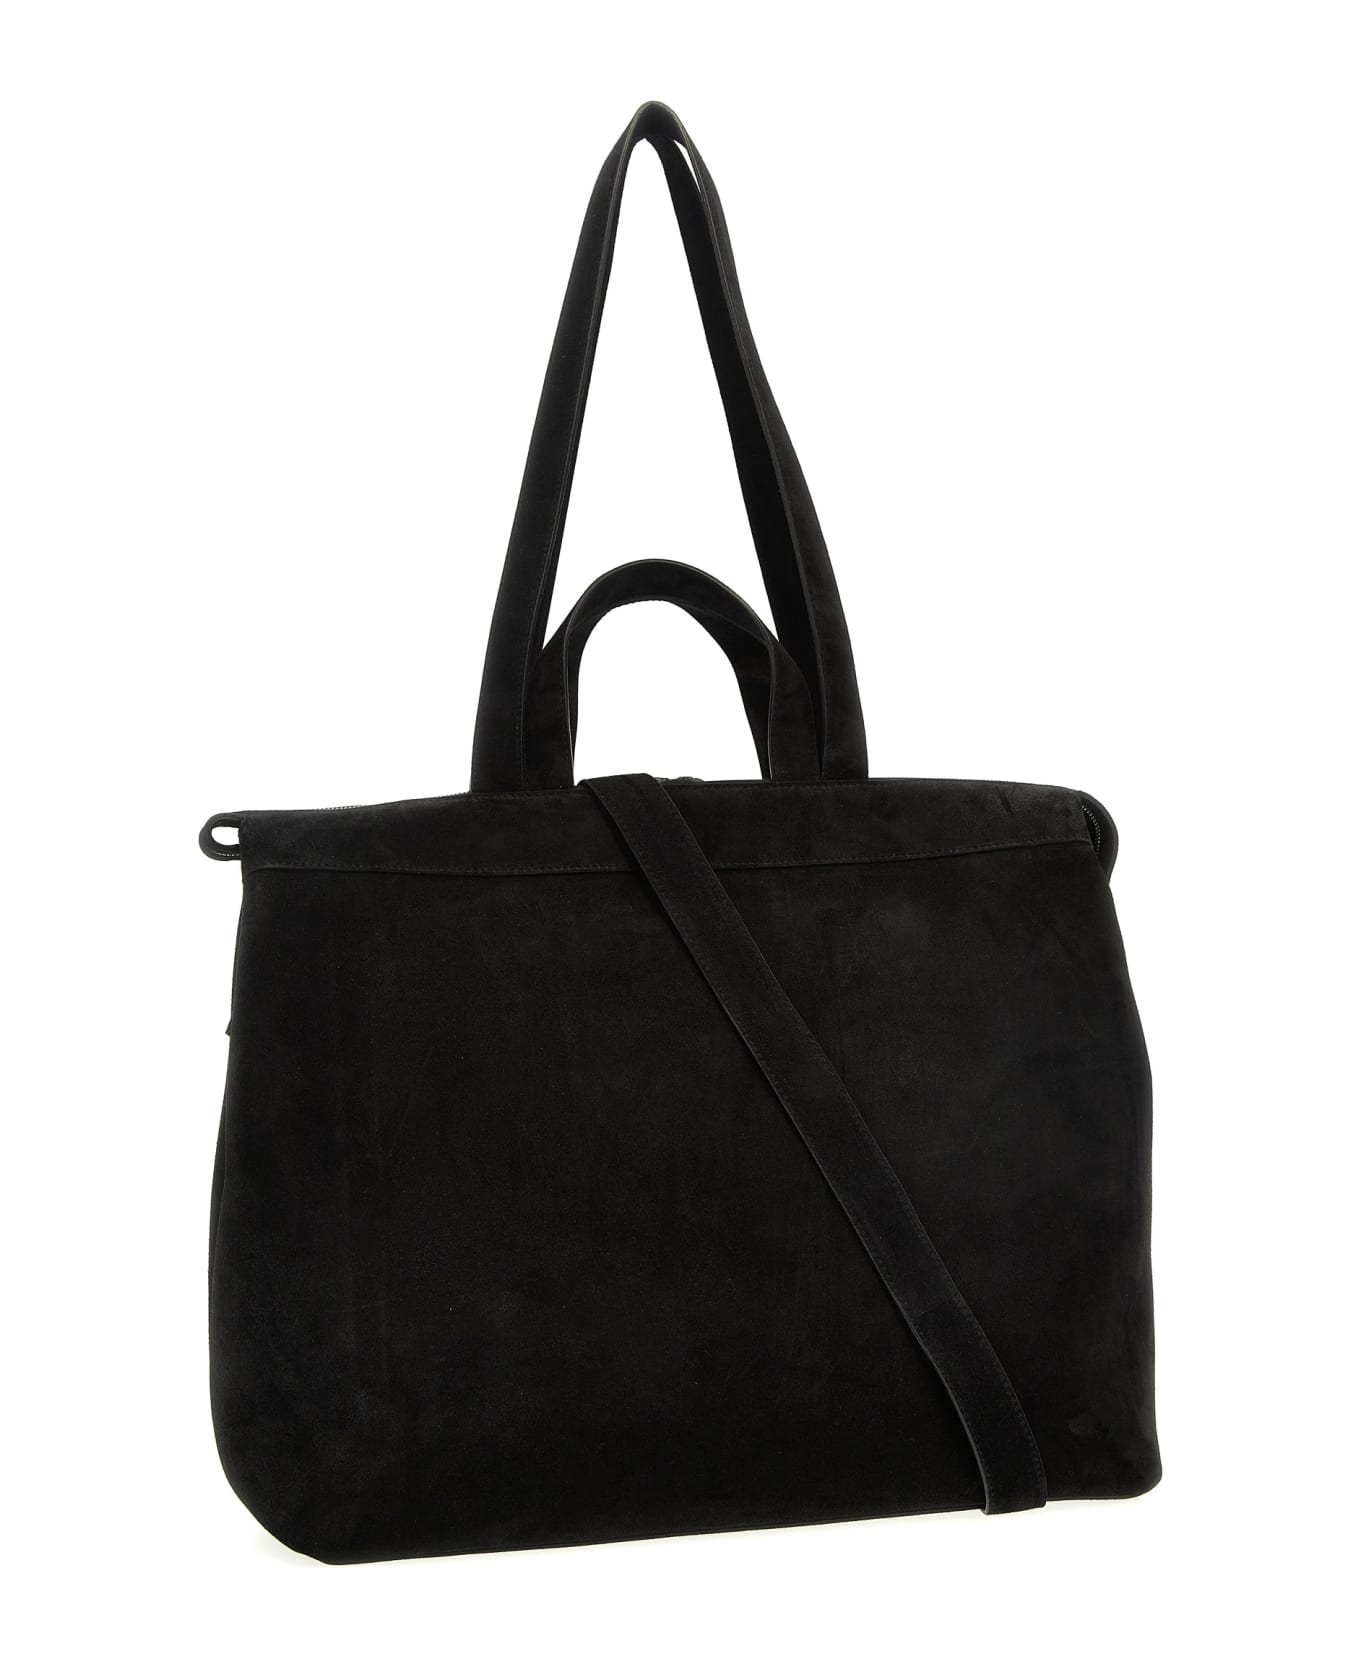 Marsell 'borso' Shopping Bag - Black   トートバッグ